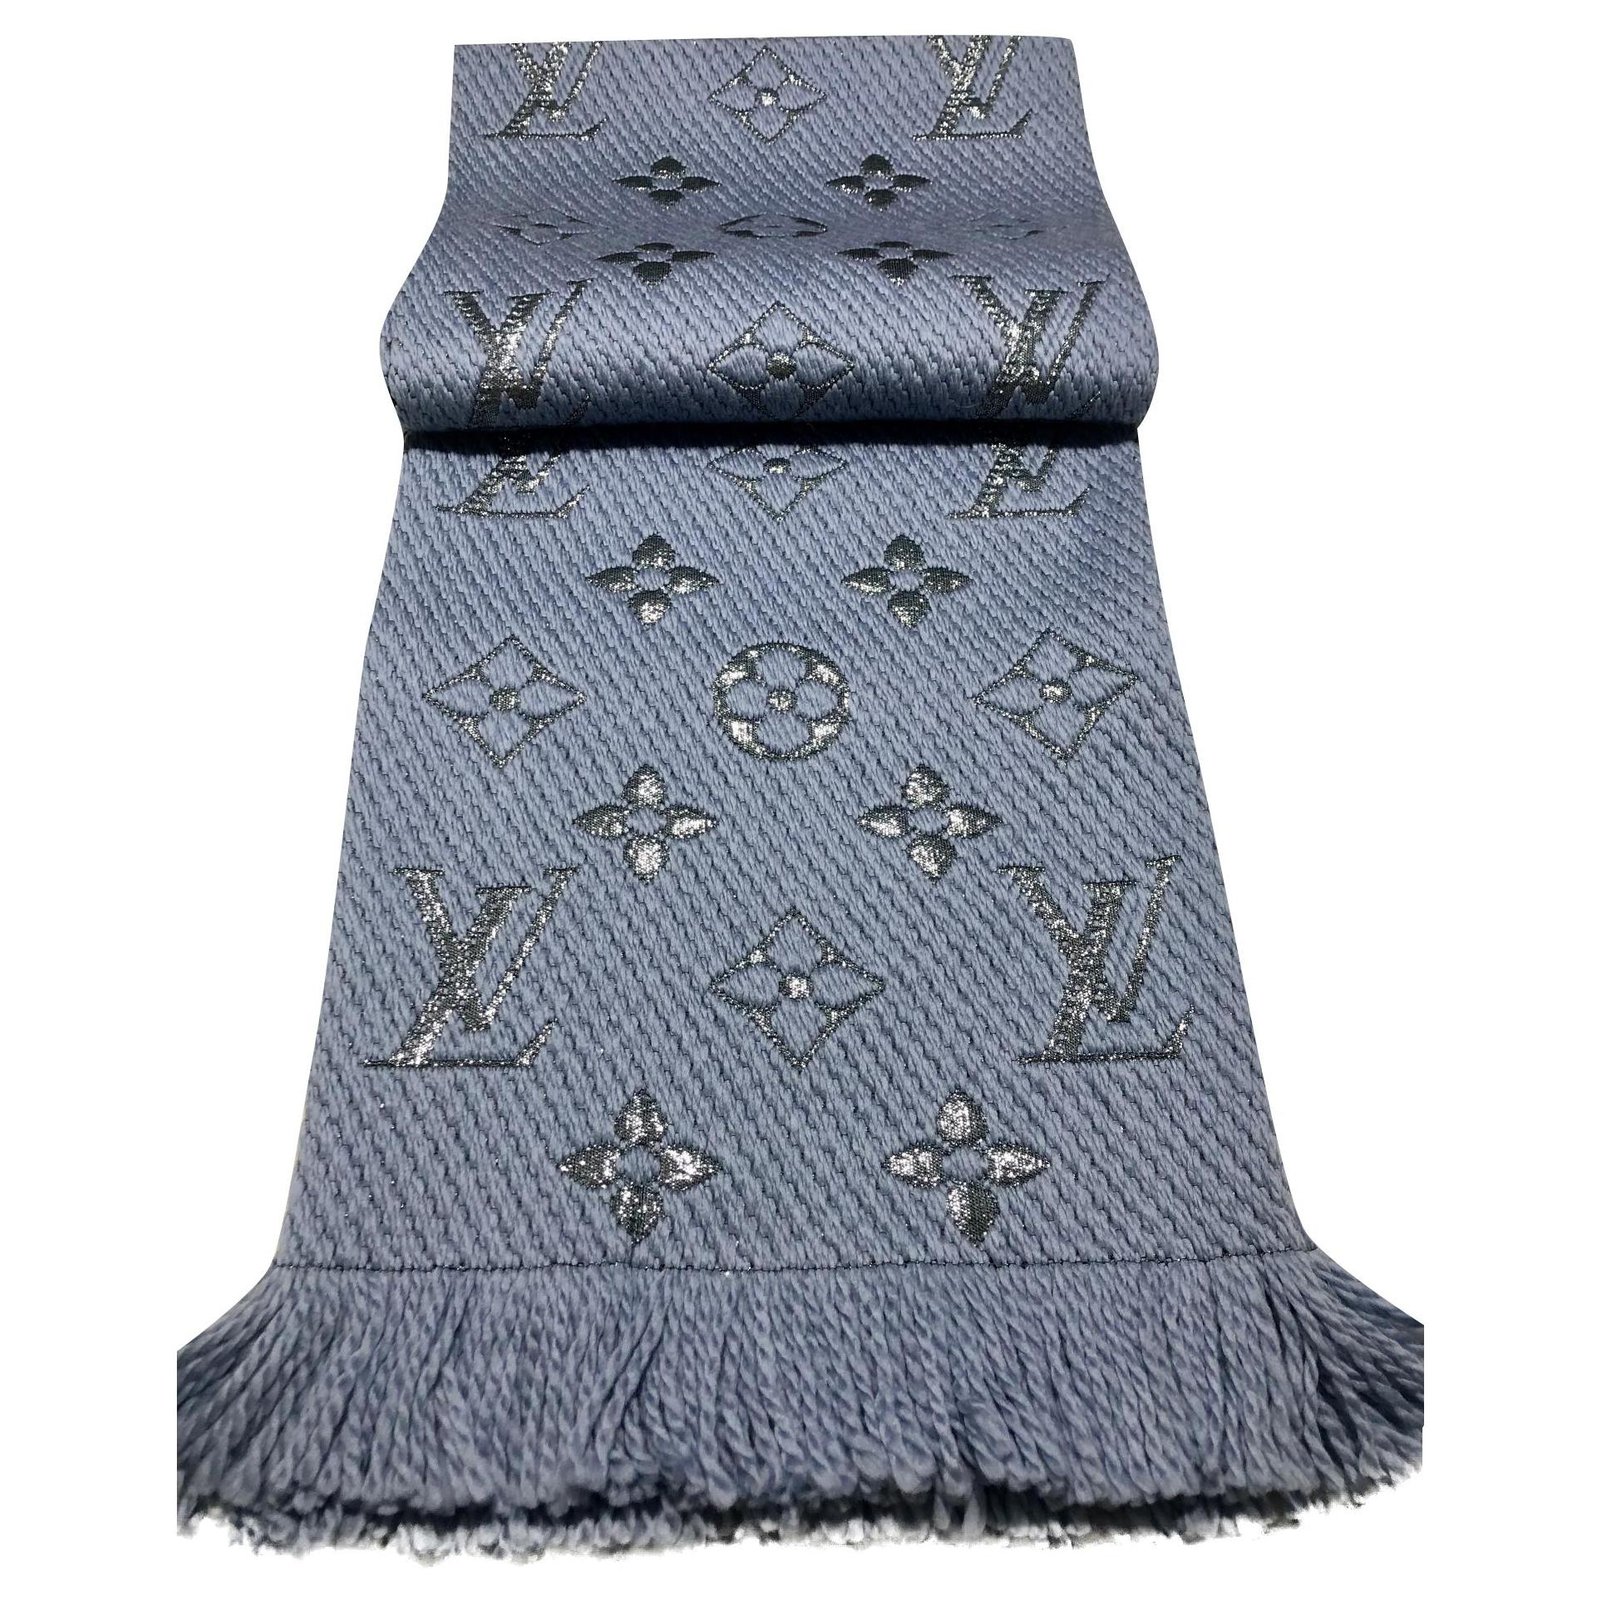 Louis Vuitton pulls keffiyehinspired scarf from website after backlash   Arab News